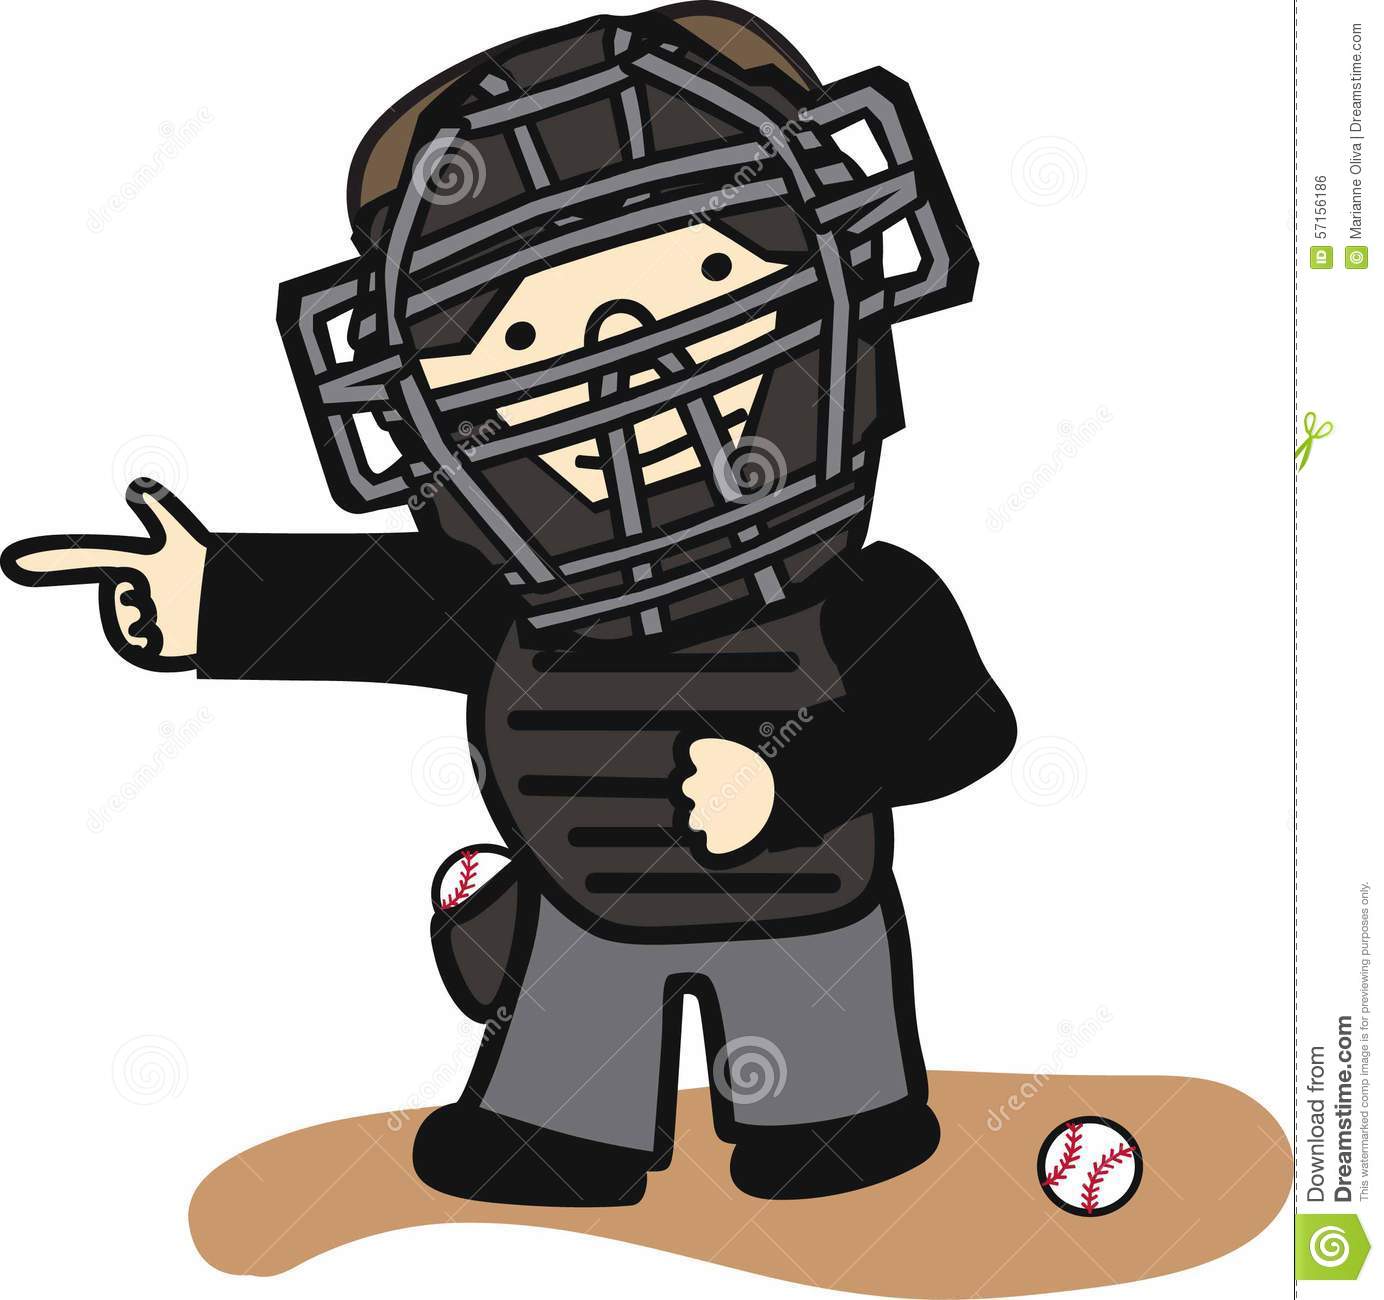 Baseball umpire clipar... pic source